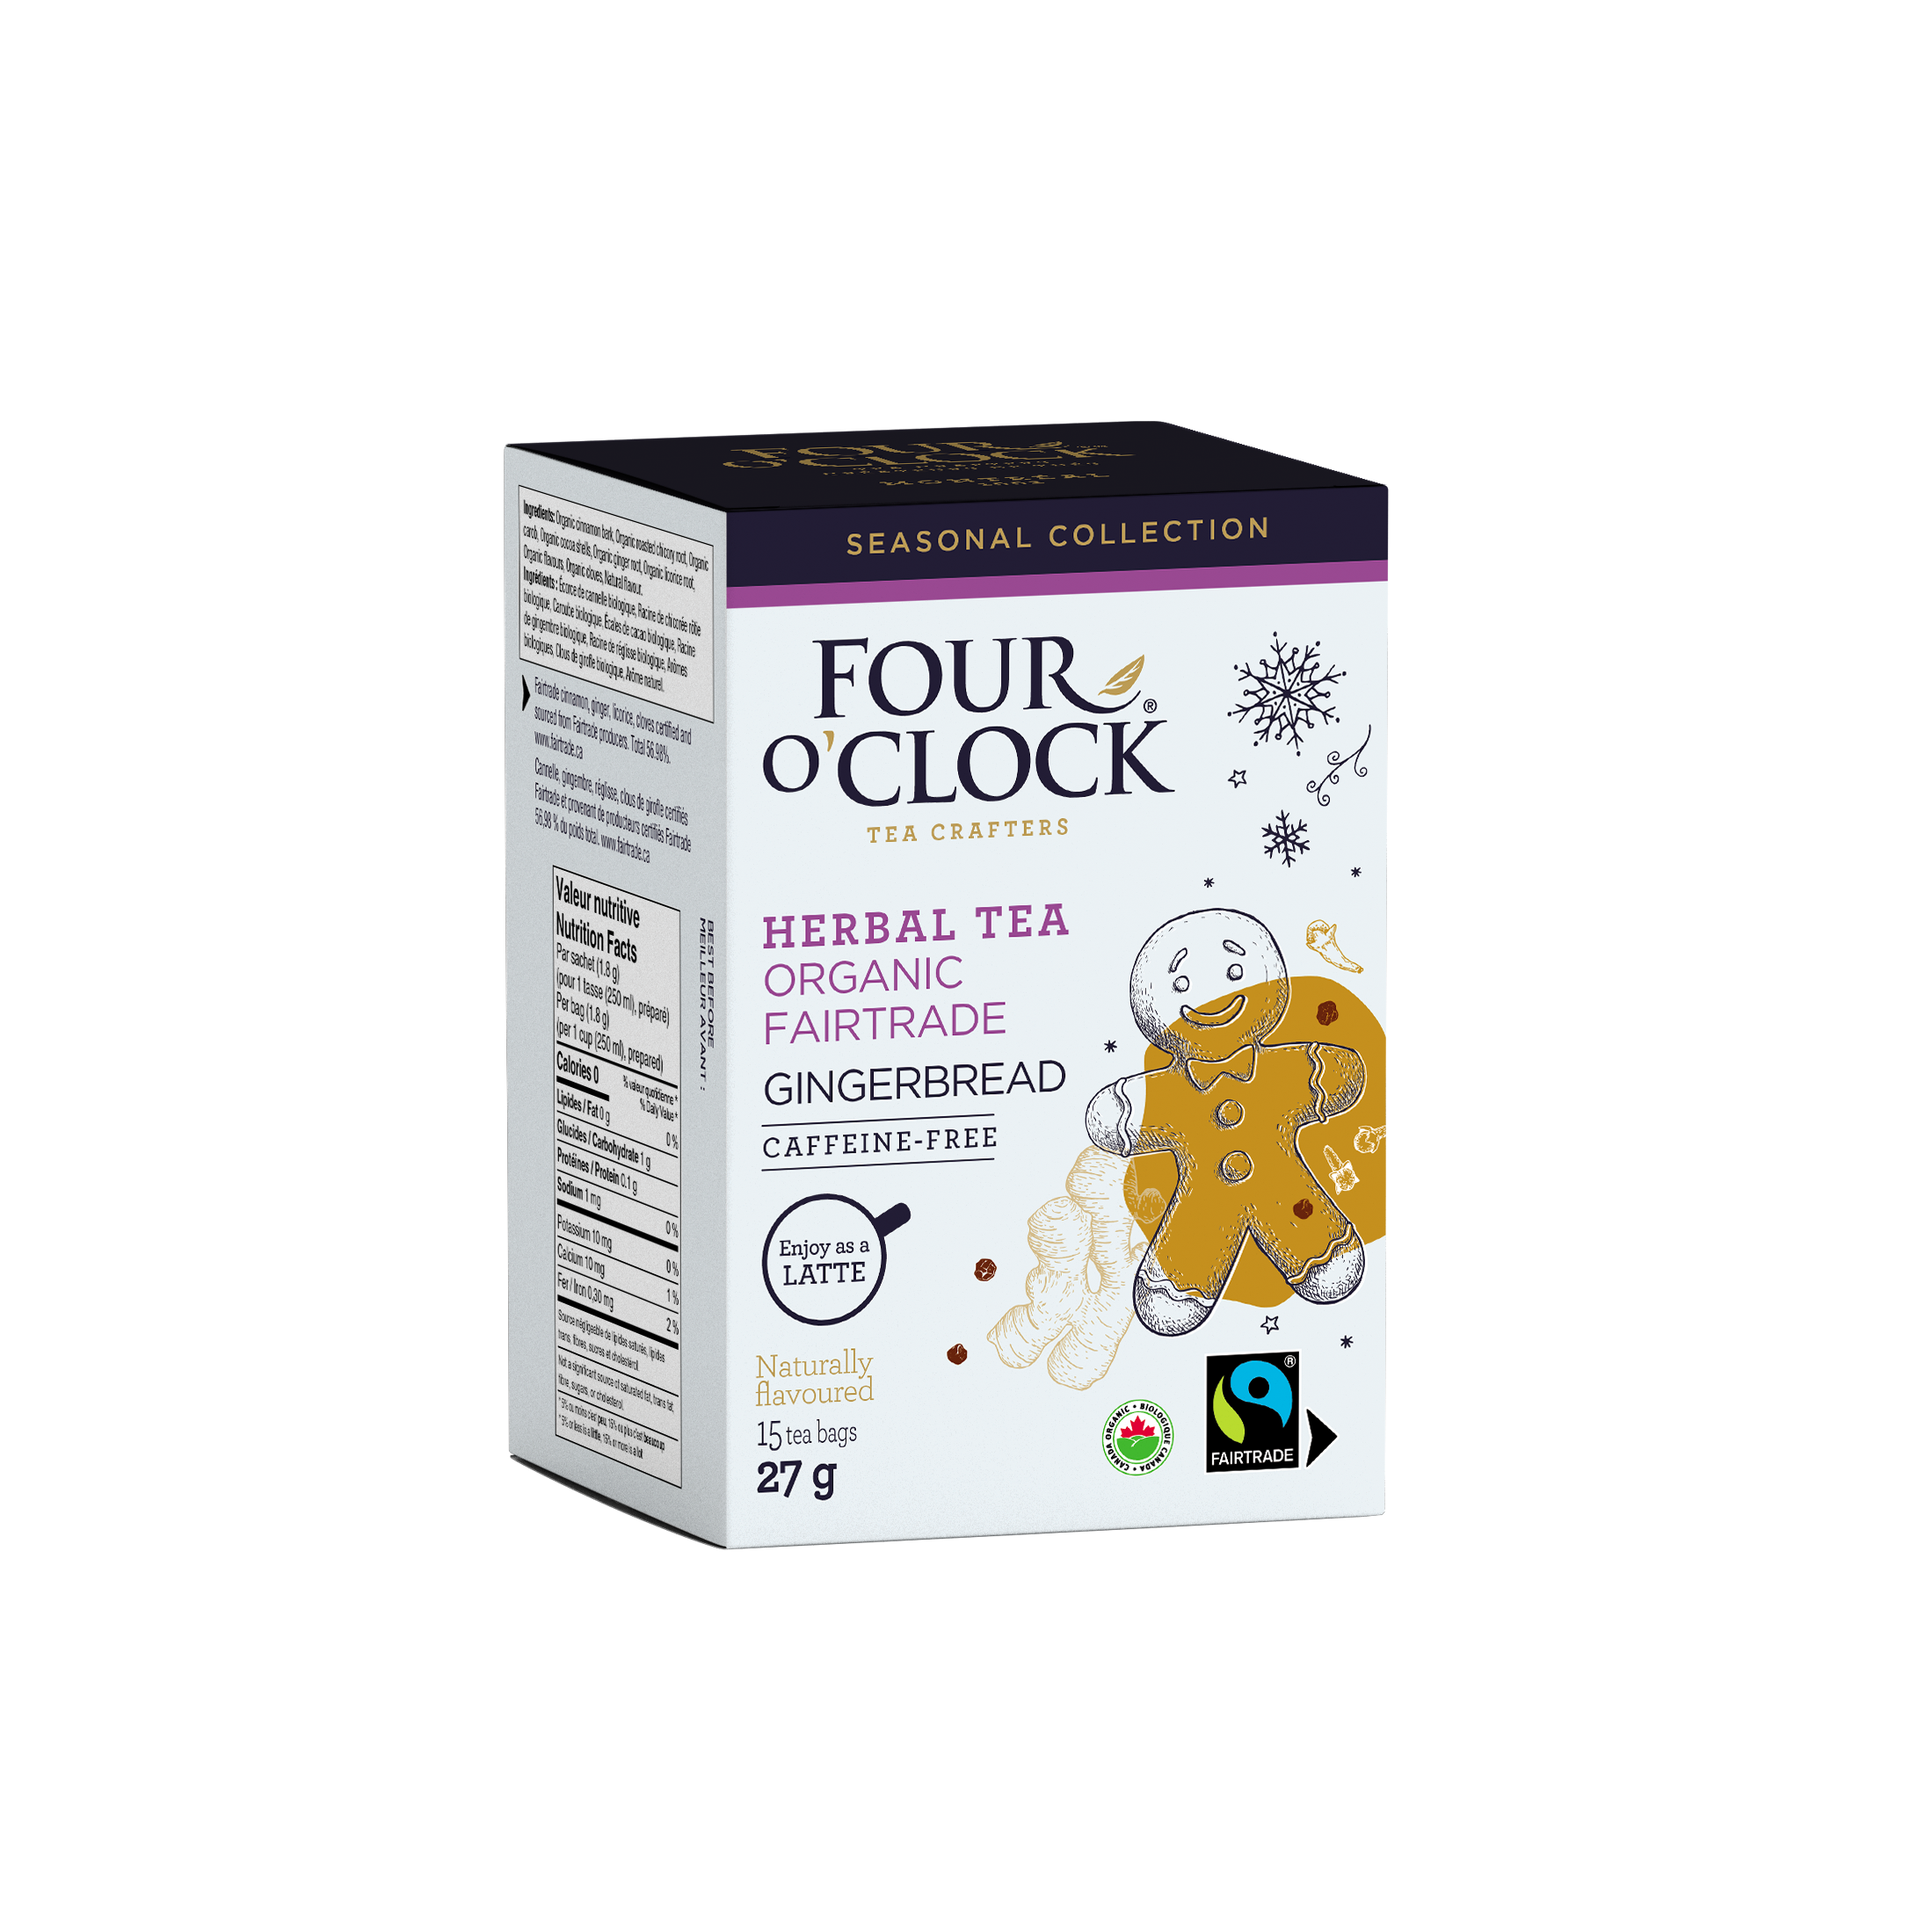 Gingerbread Organic Fairtrade Herbal Tea